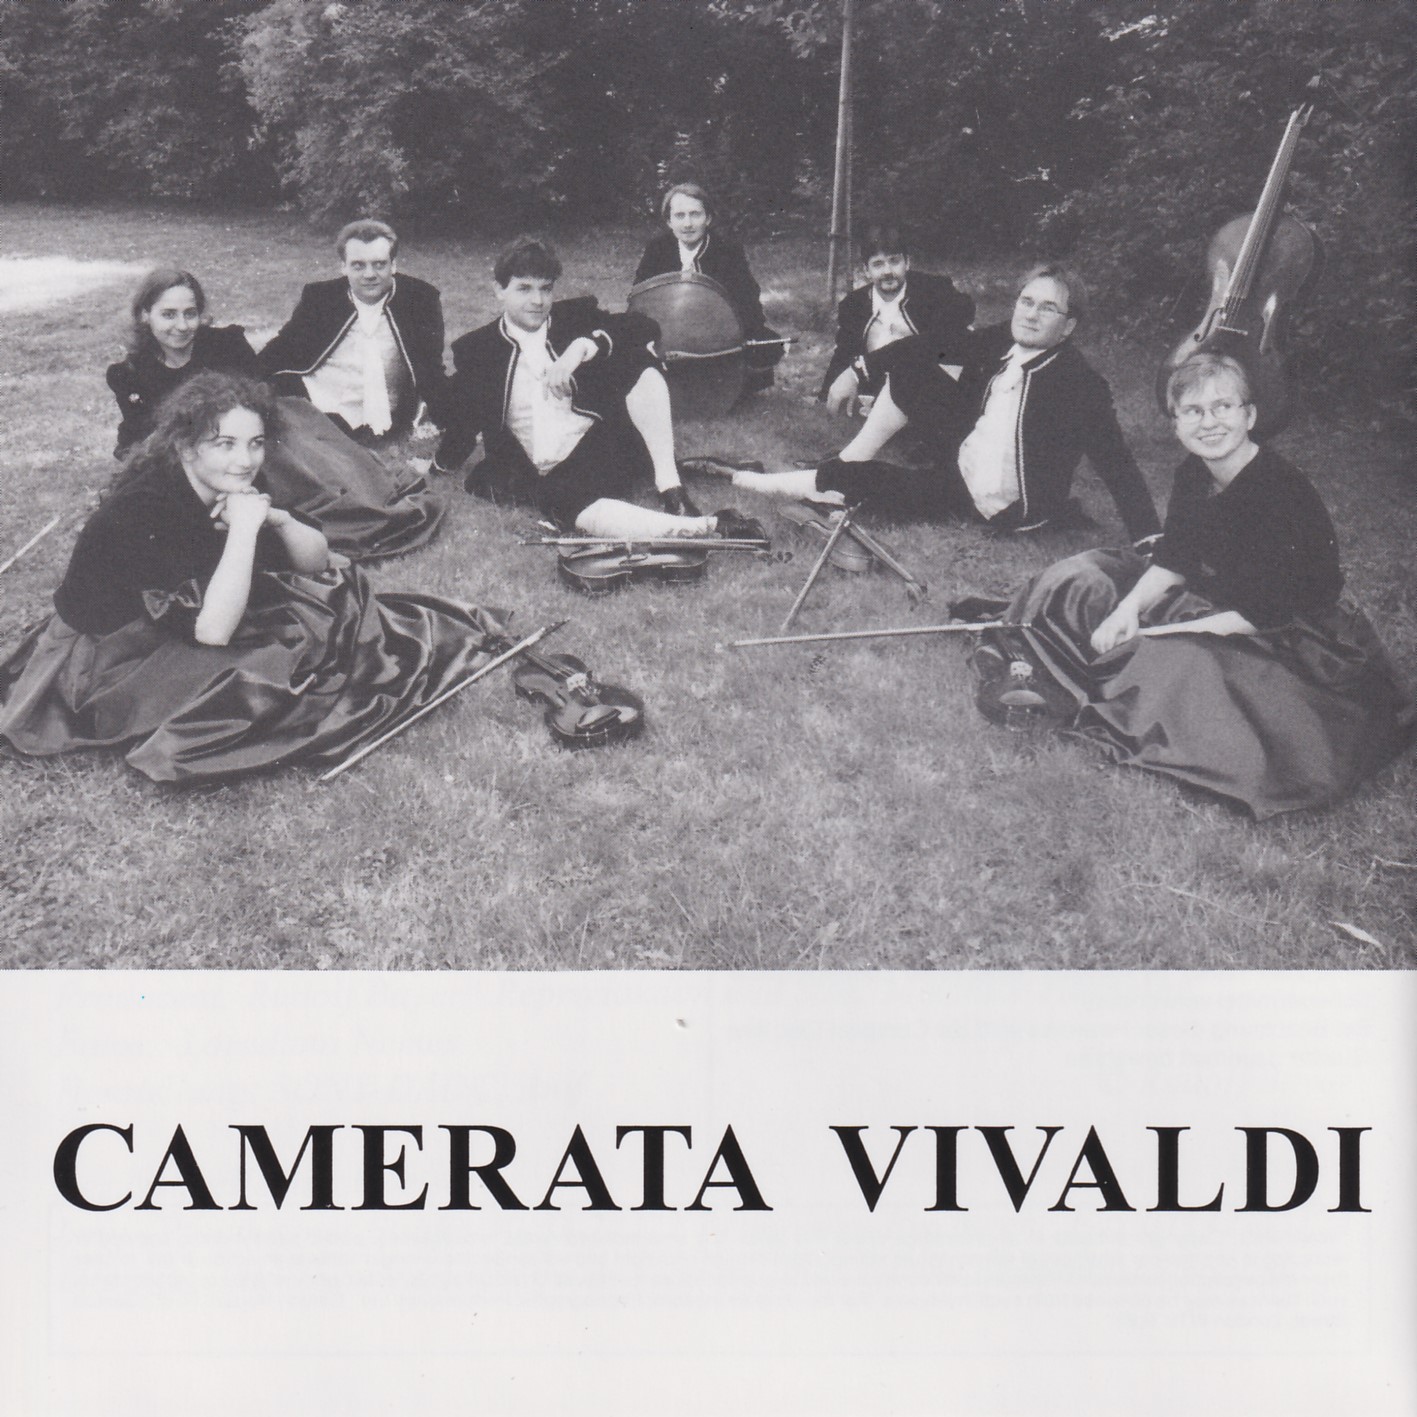 Antonio Vivaldi - Il maestro Veneziano